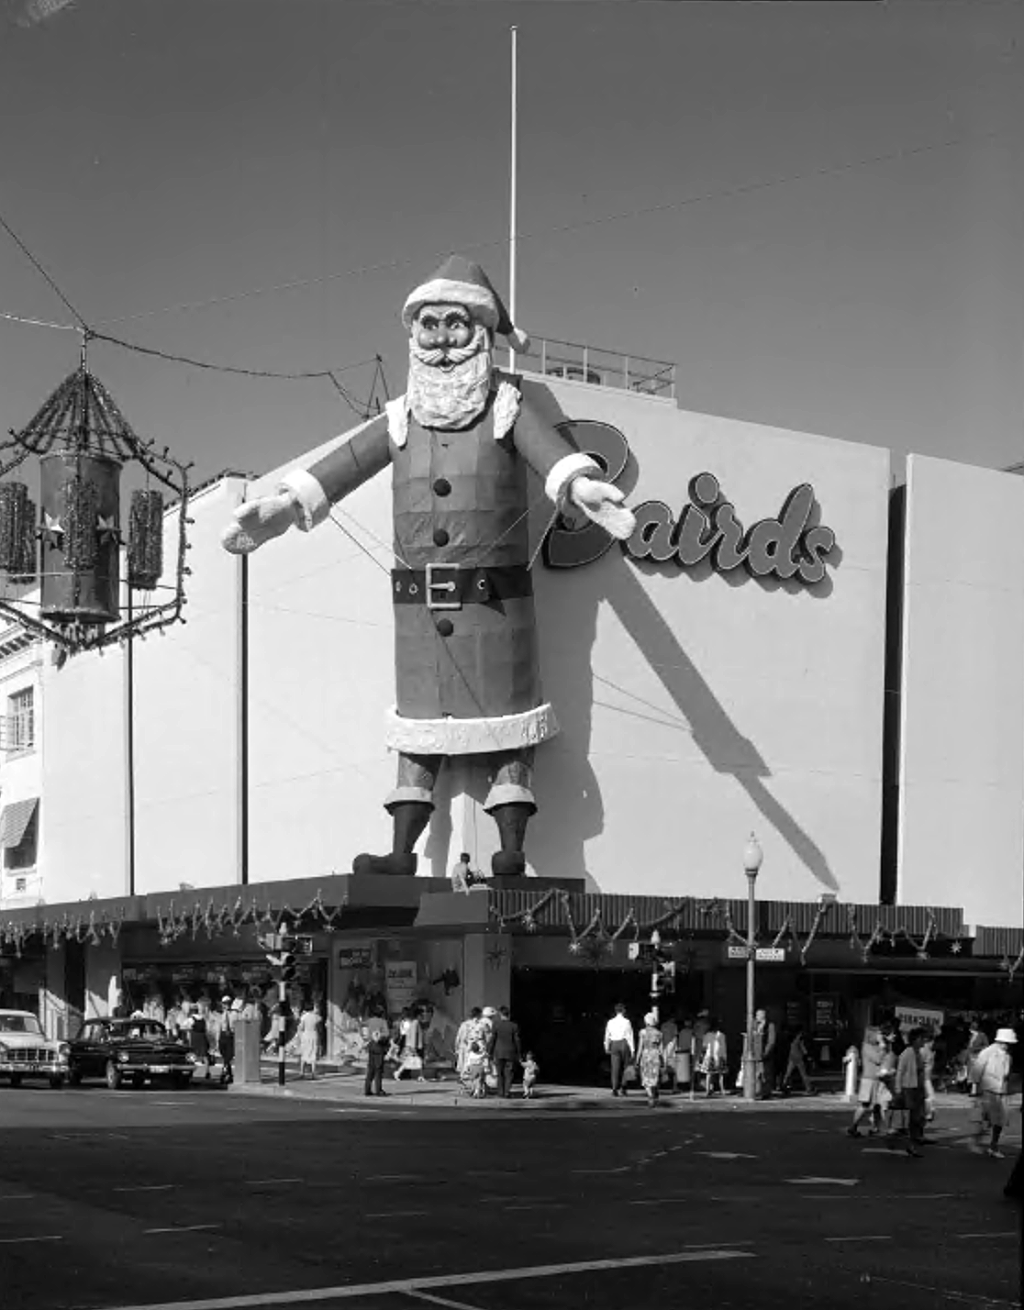 Perth Vintage Christmas Decorations, Santa, Bairds, 1964